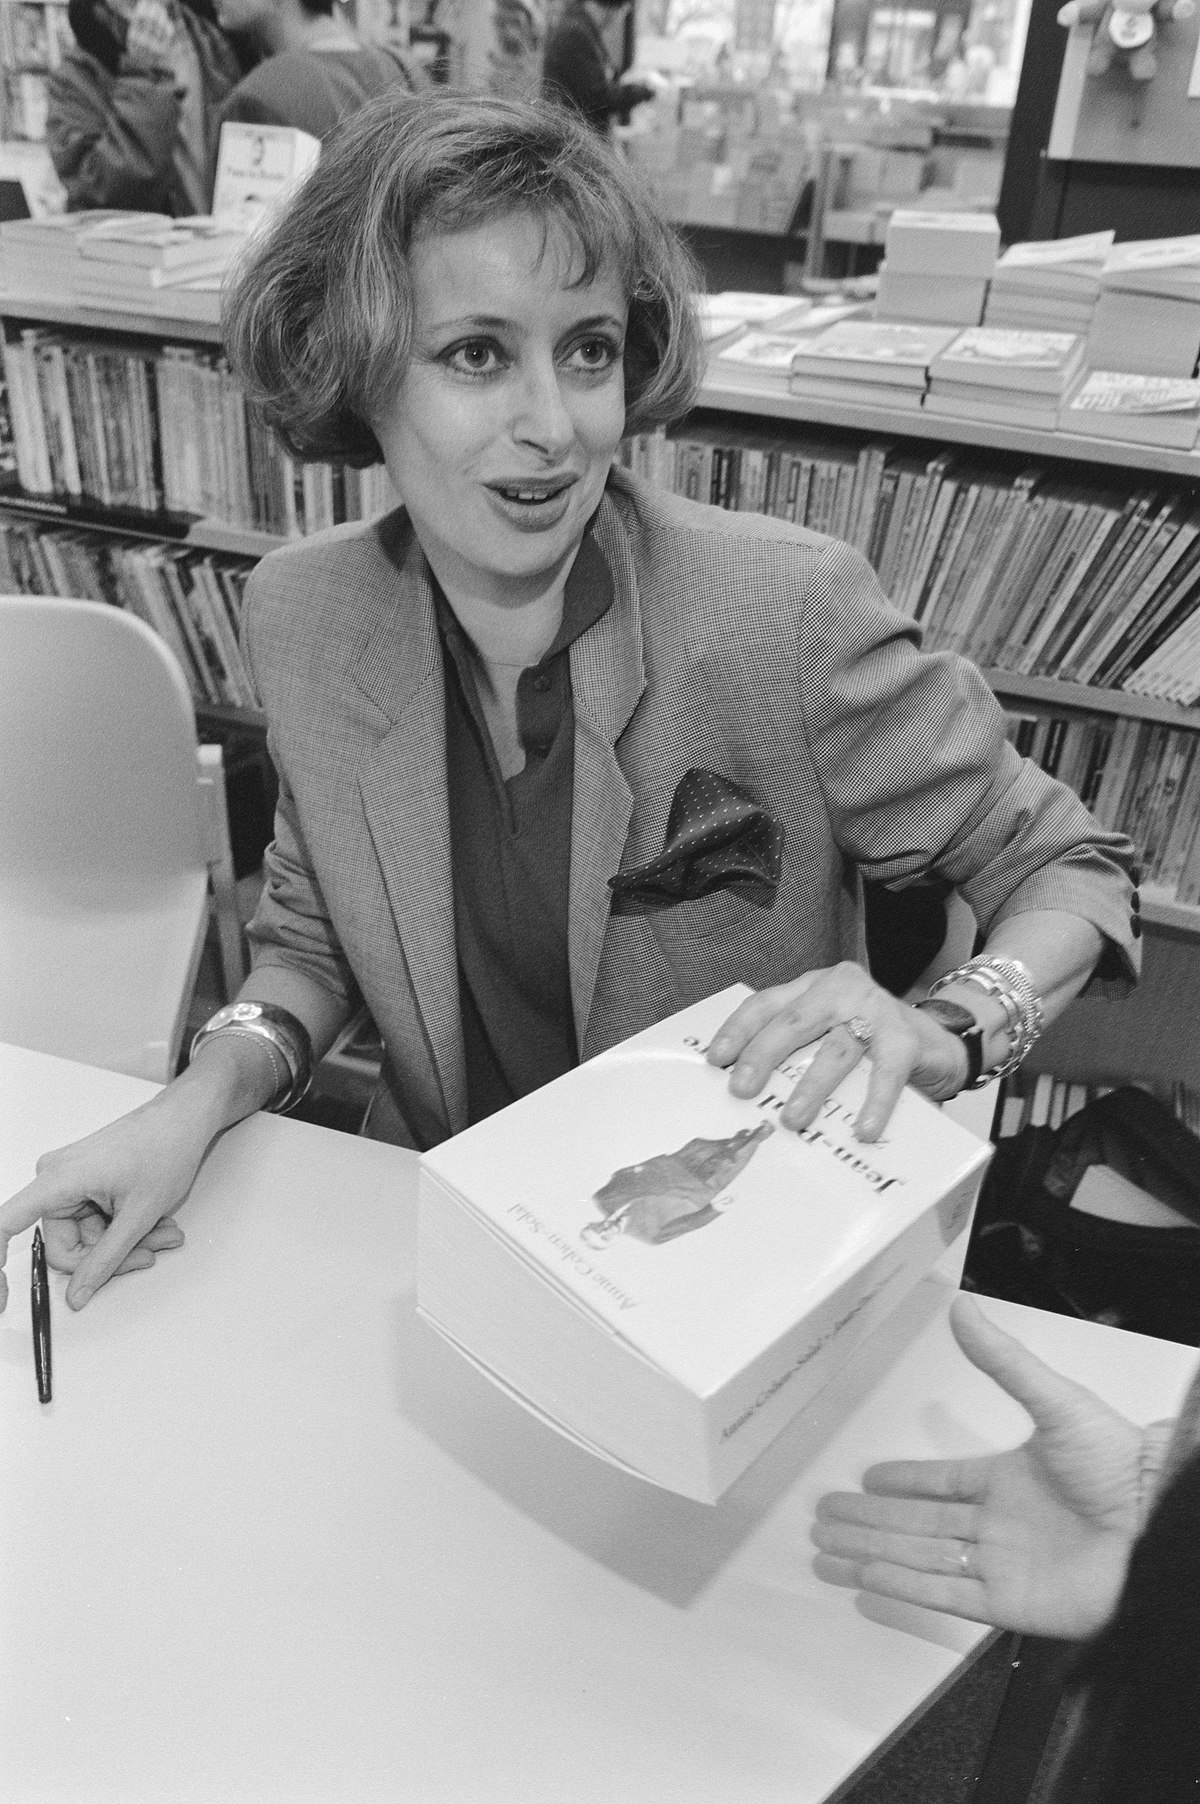 Saving Attentive Obedience File:Utrecht, Franse schrijfster Annie Cohen Solal signeert haar biografie  over Jean , Bestanddeelnr 934-1979.jpg - Wikimedia Commons